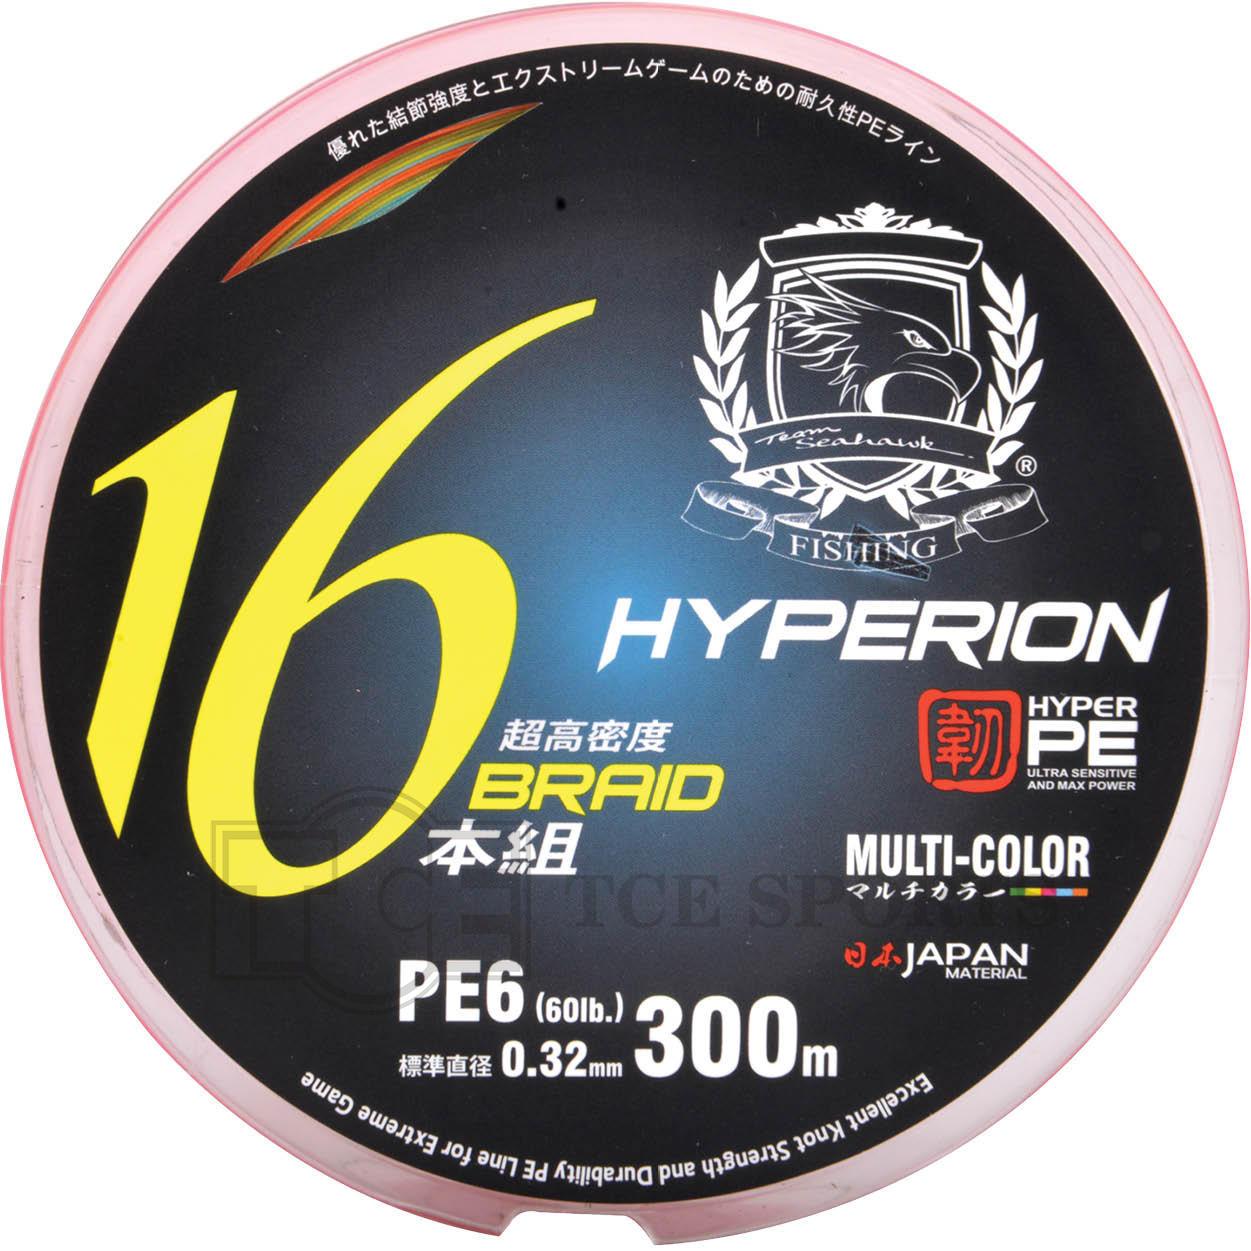 Hyper 16X Braid - maina